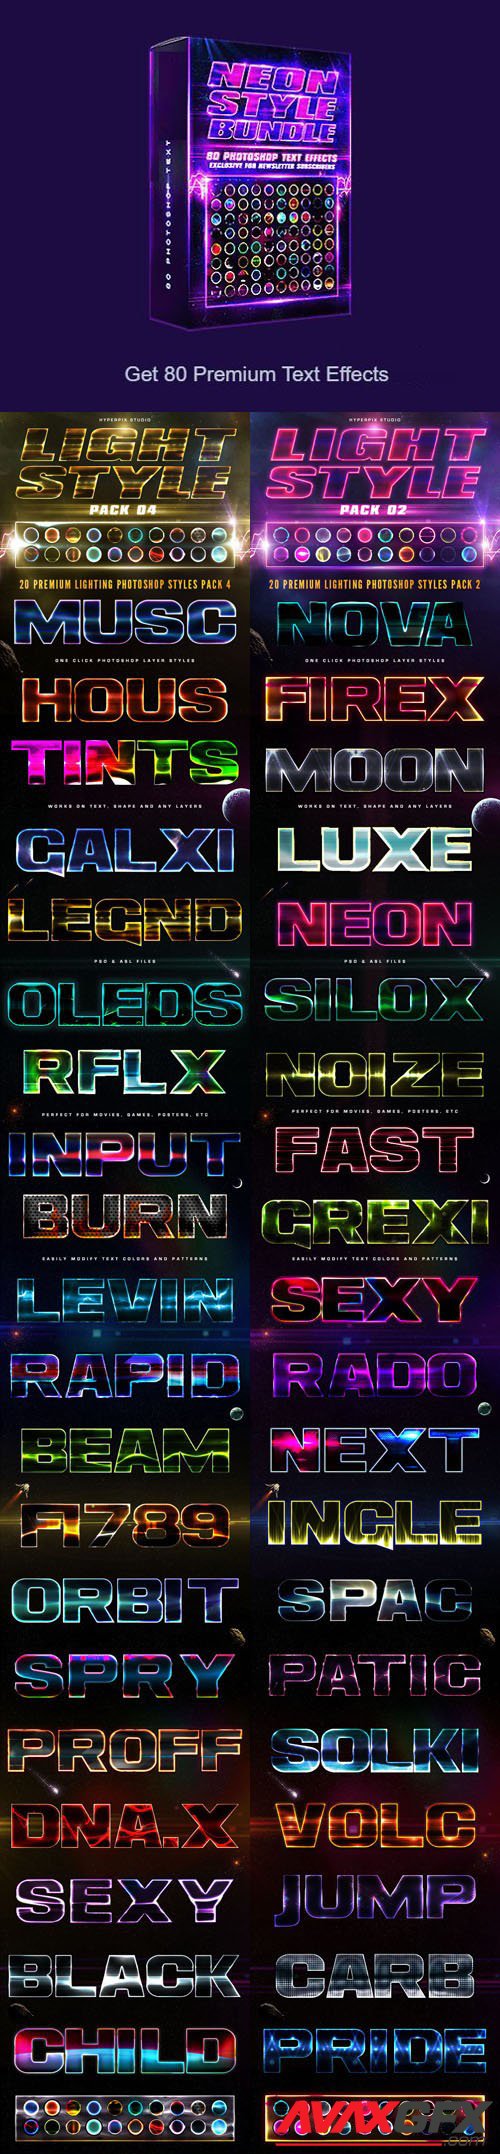 Neon Style Bundle - 80 Premium Text Effects for Photoshop